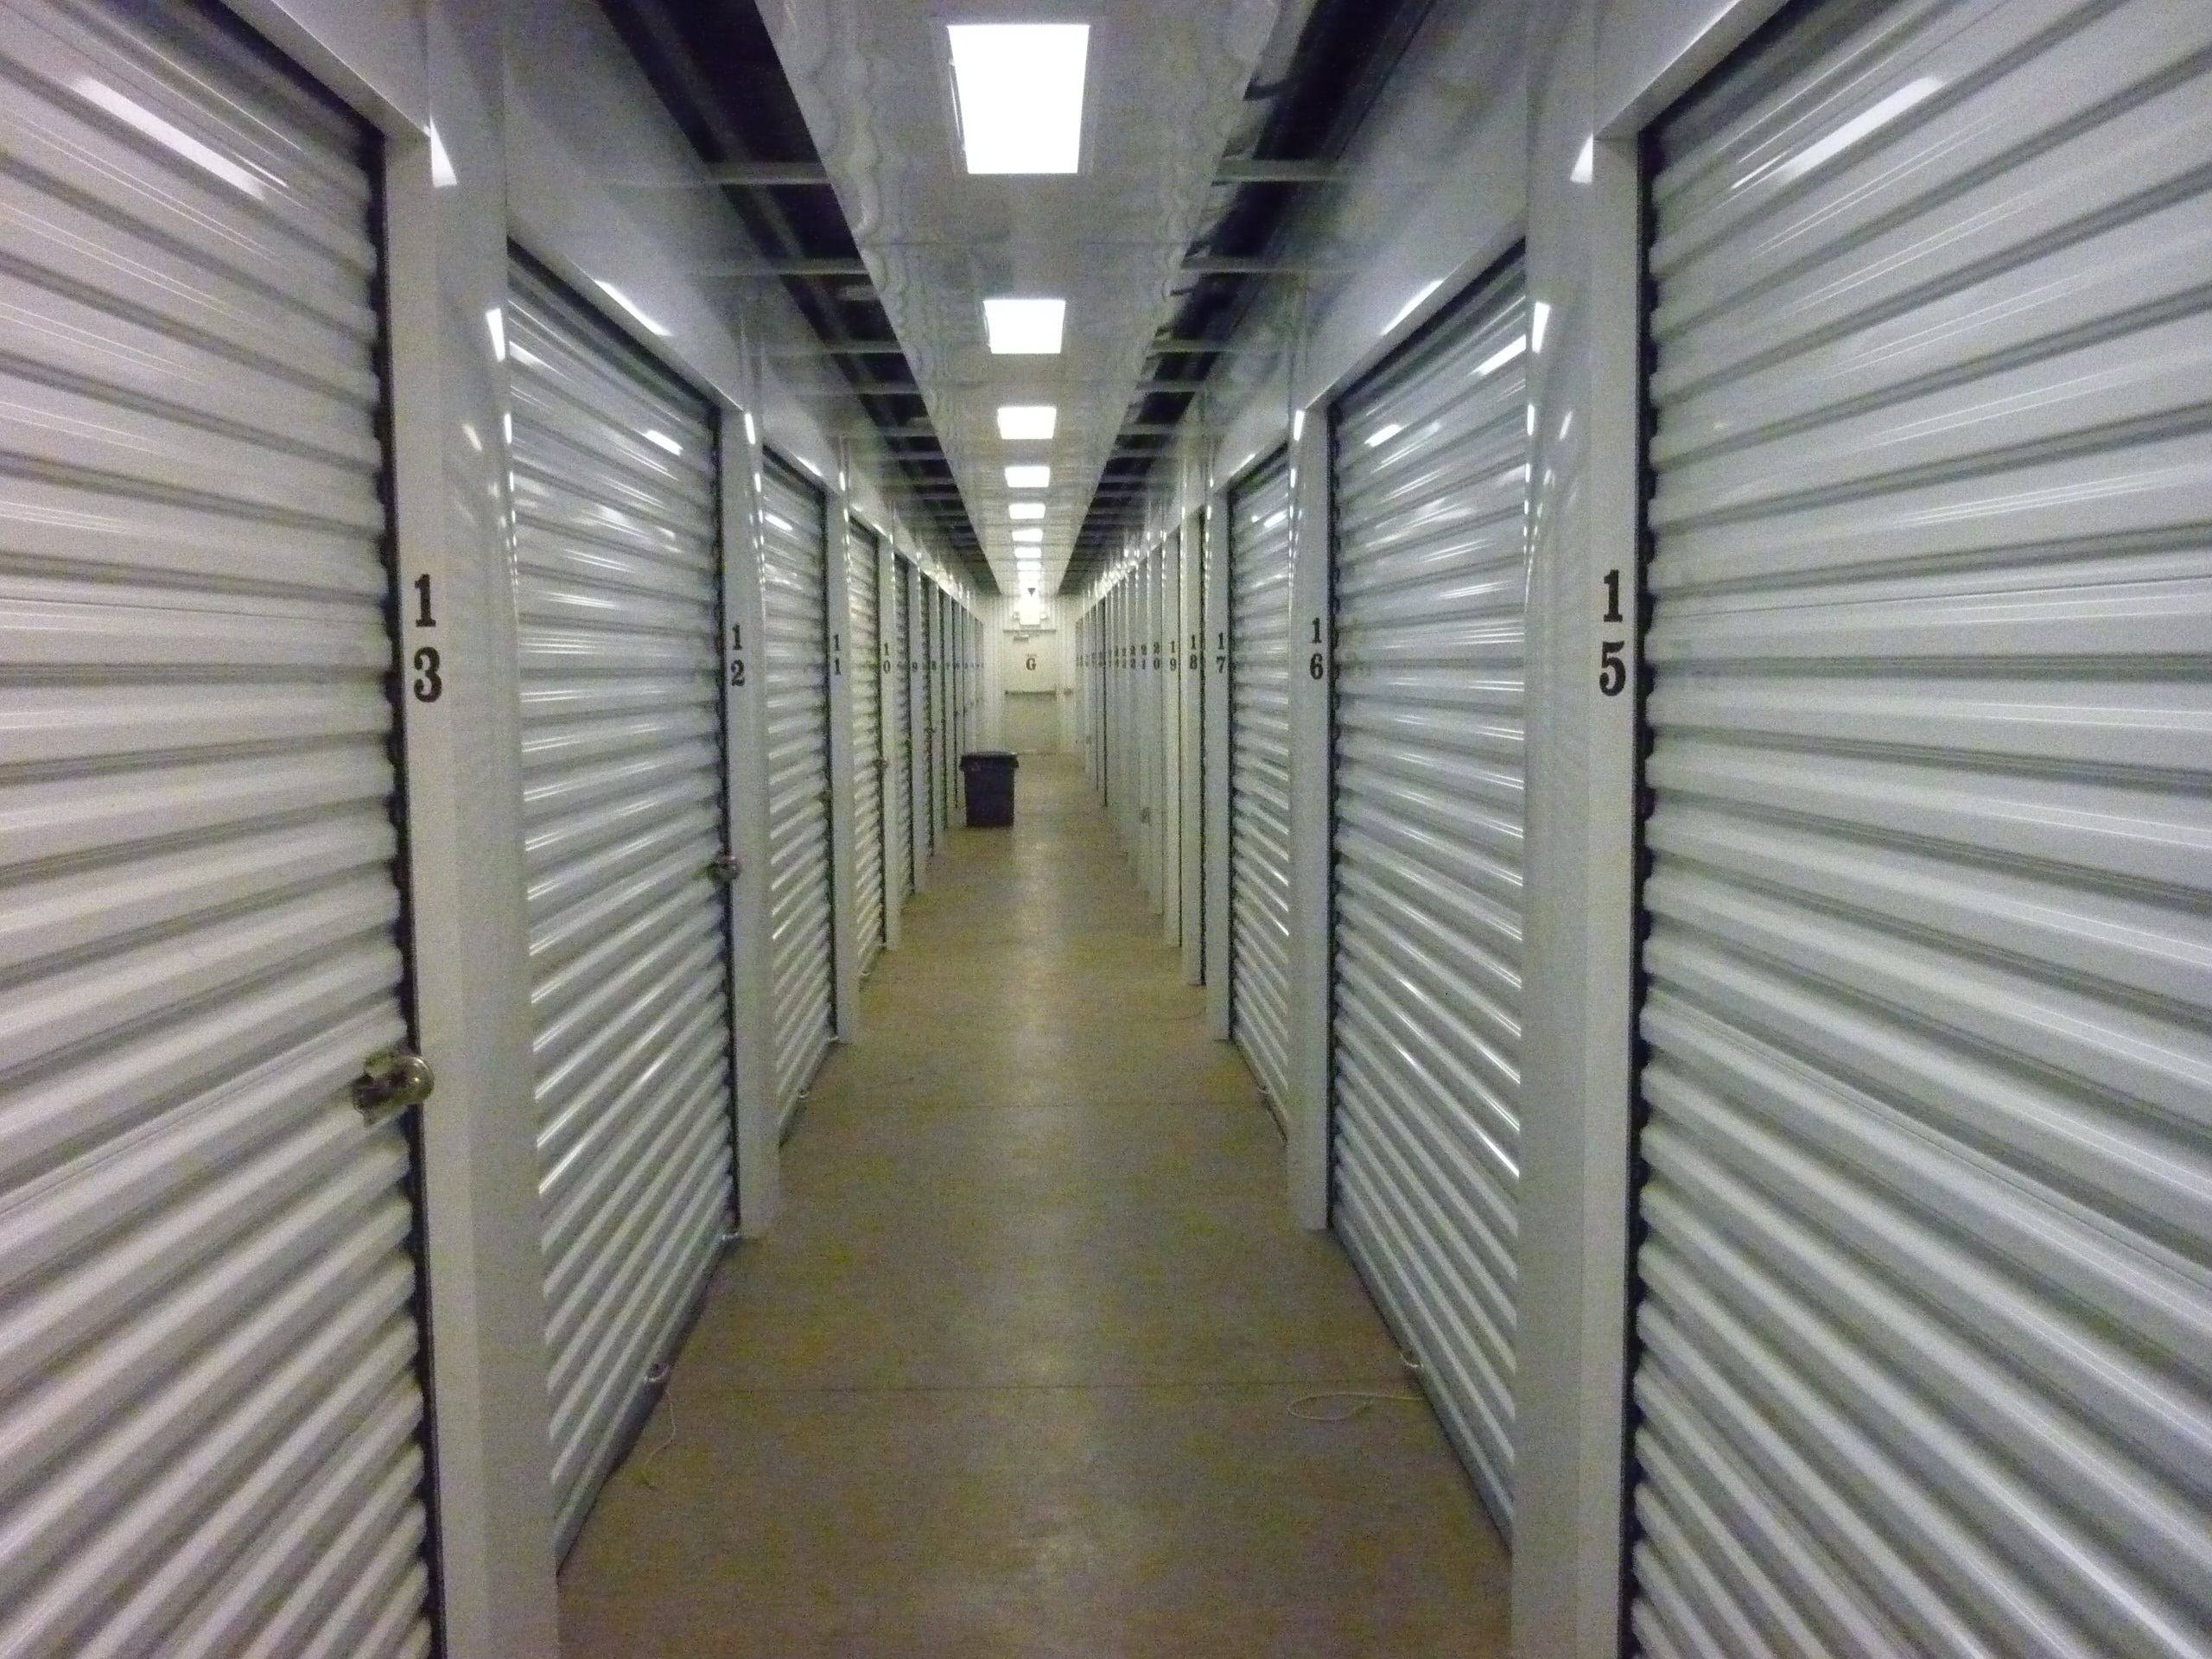 Hallway with indoor access storage units